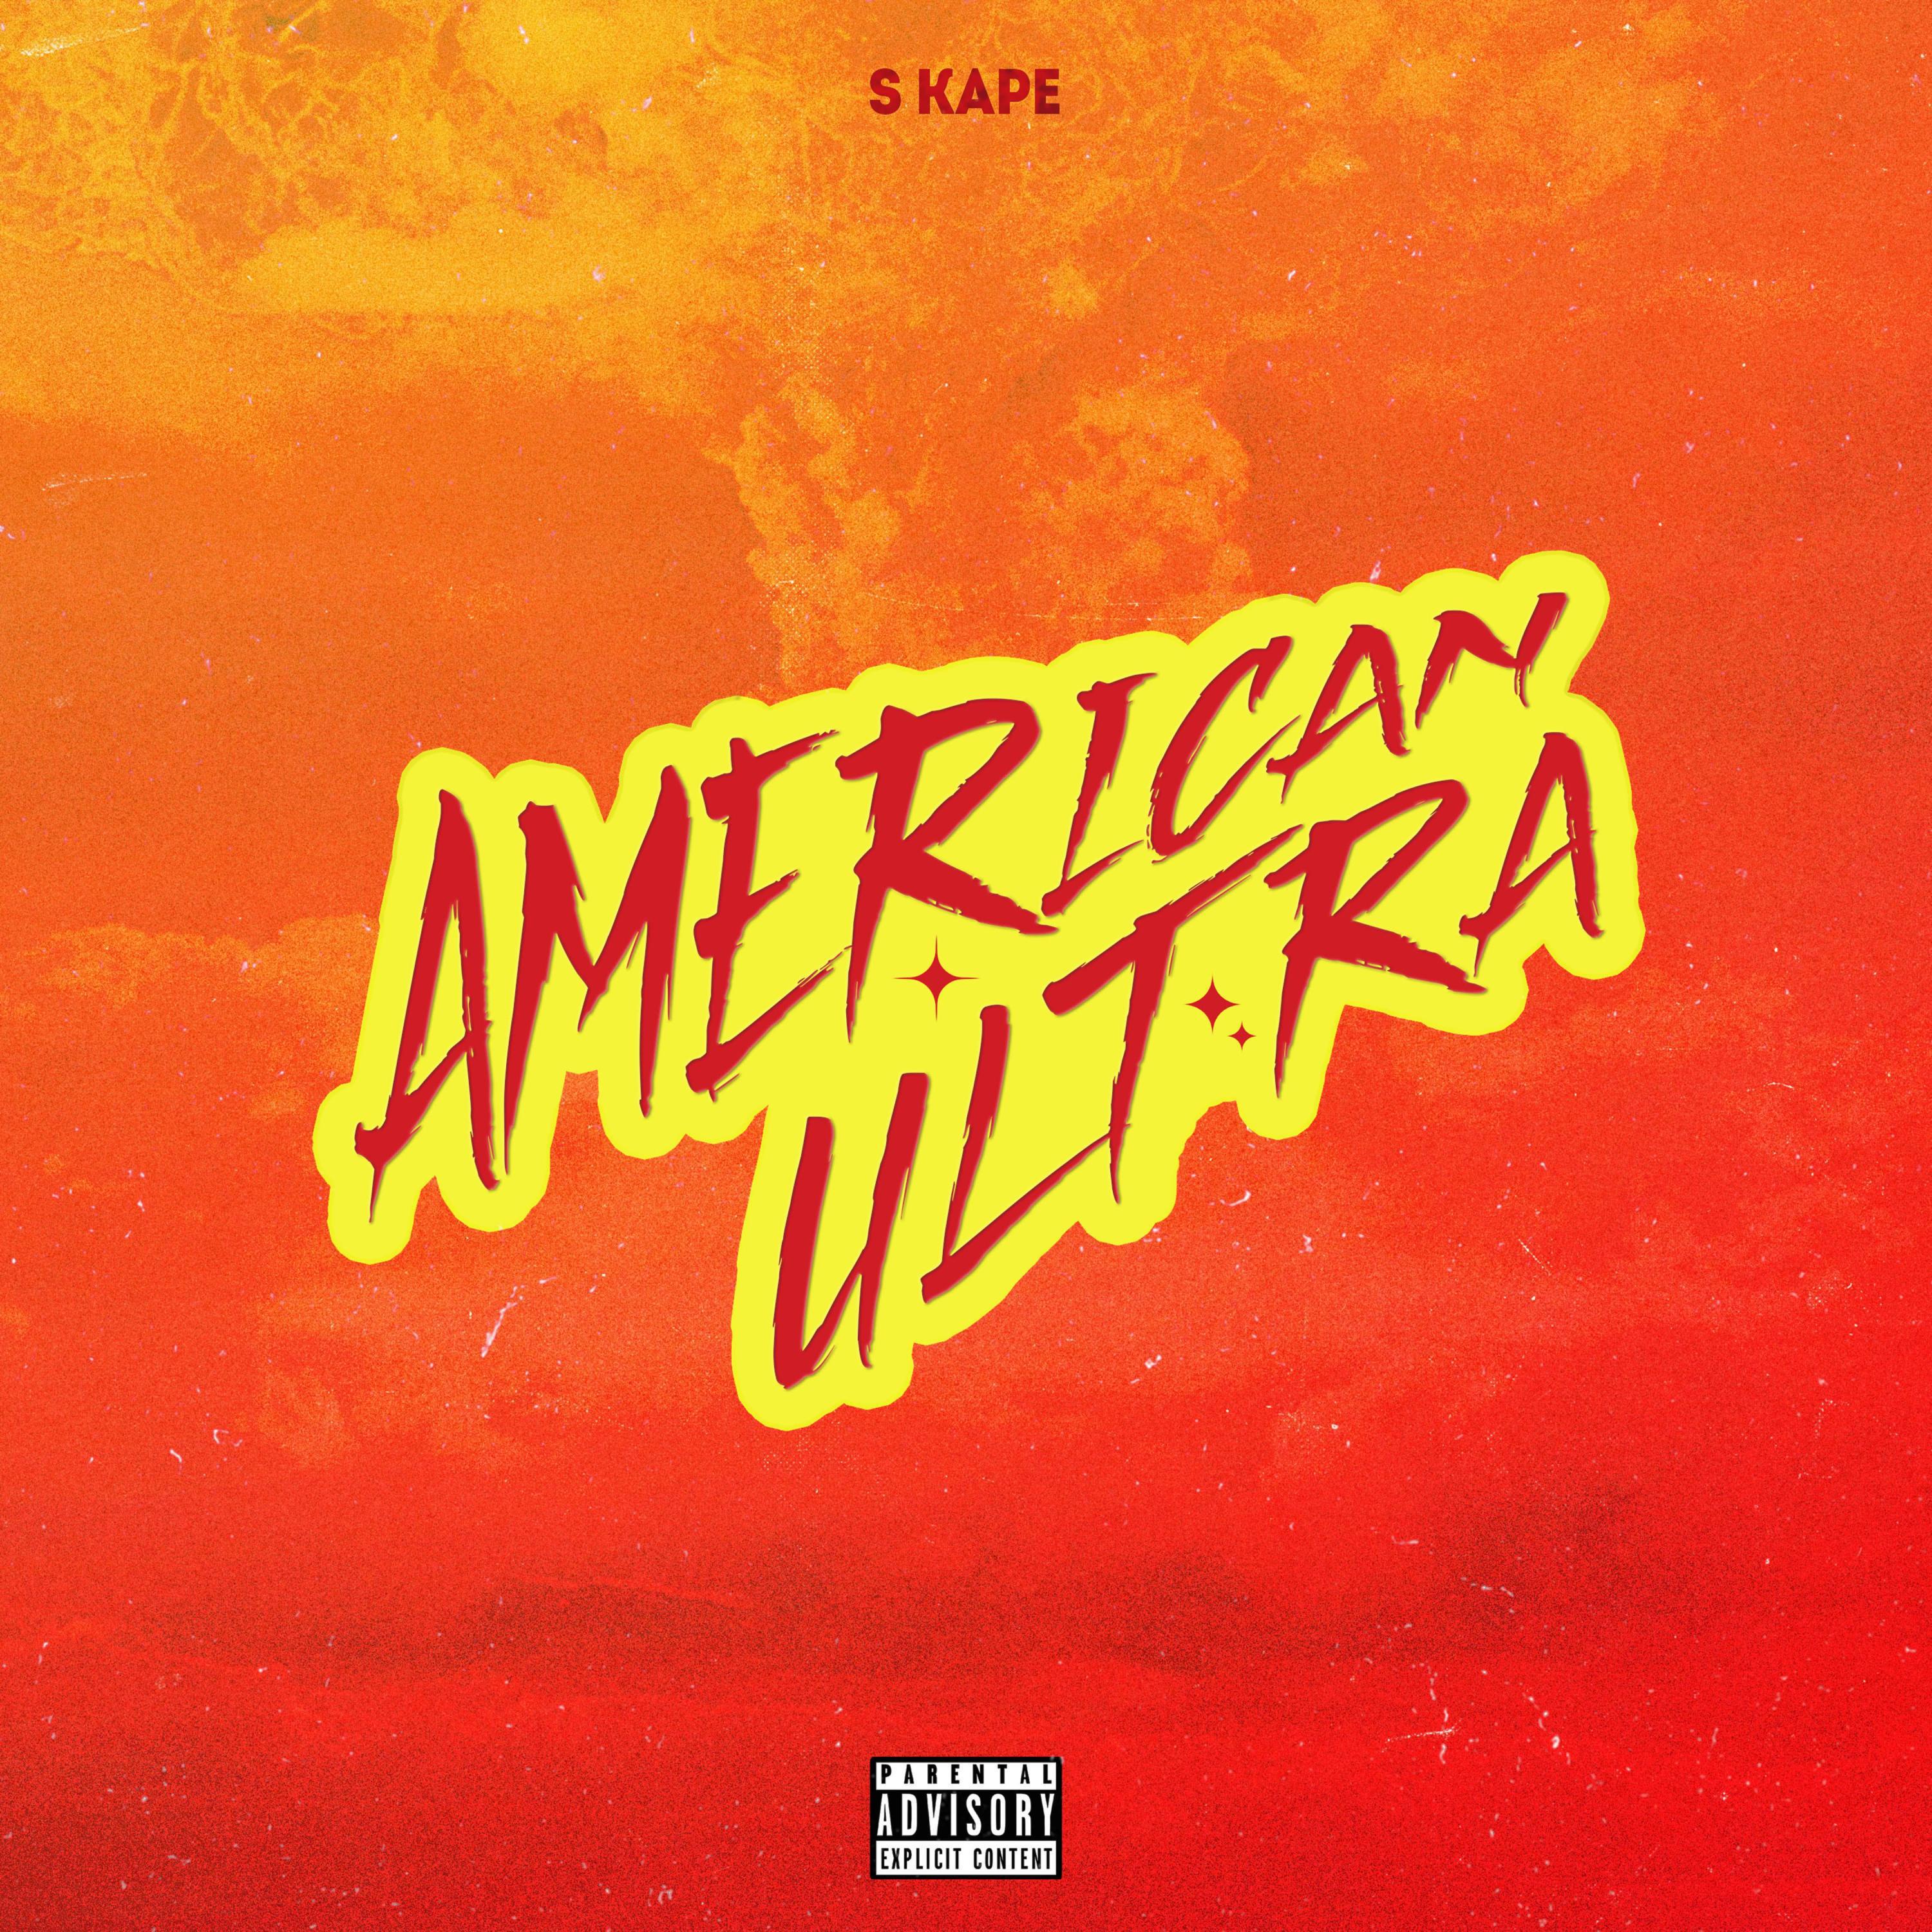 S Kape - American Ultra